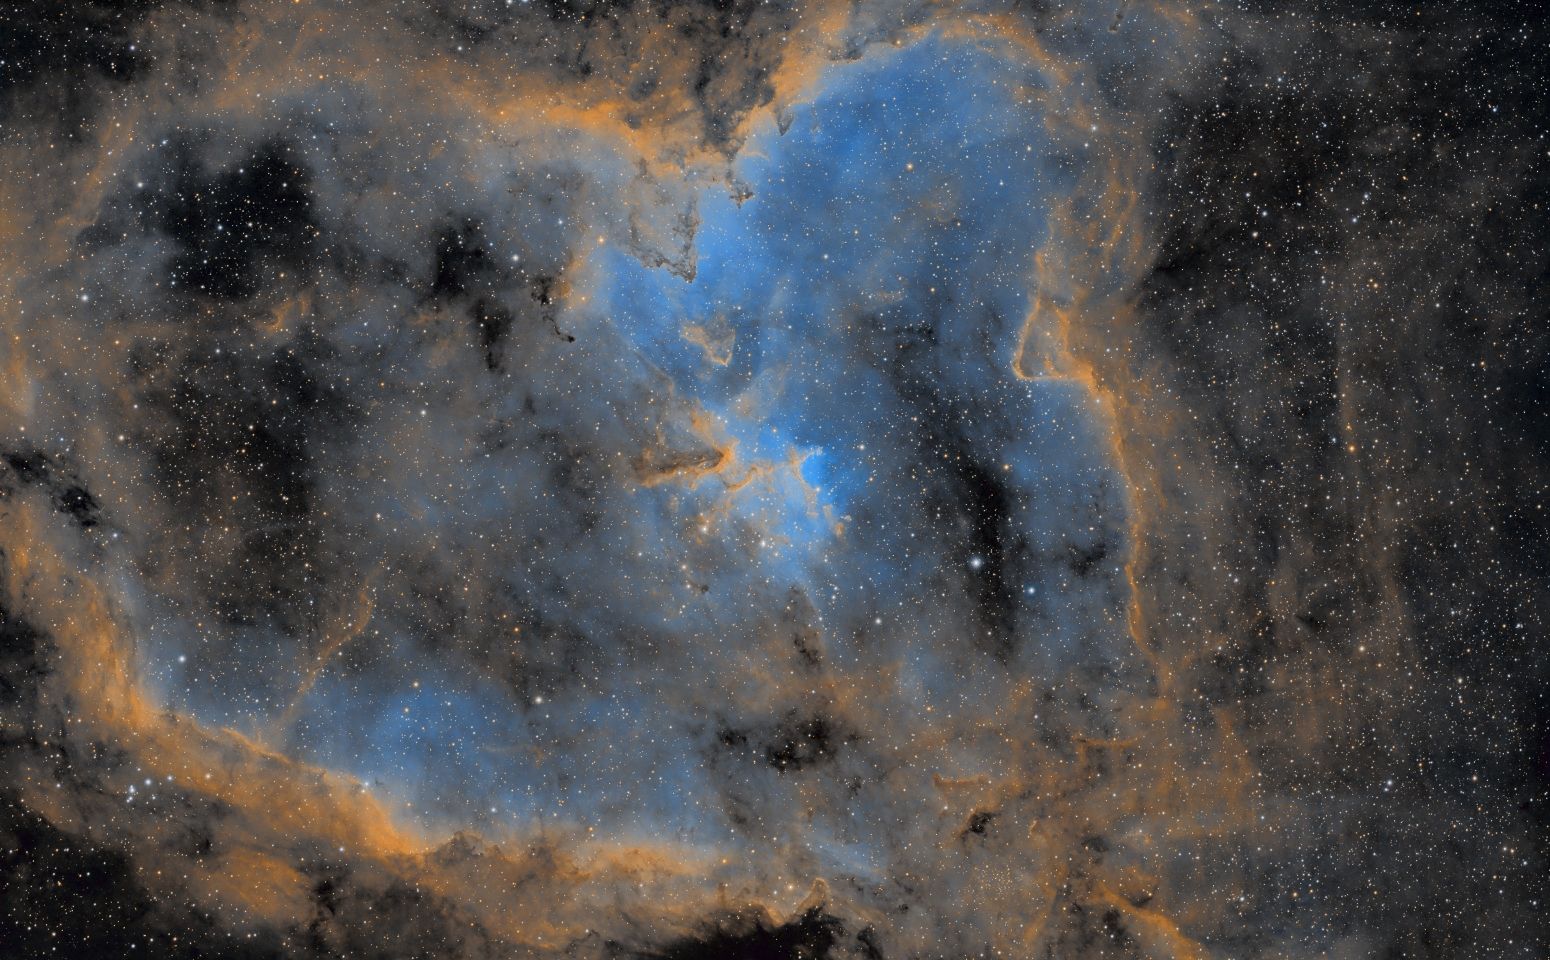 hubble telescope of the heart nebula ic 1805